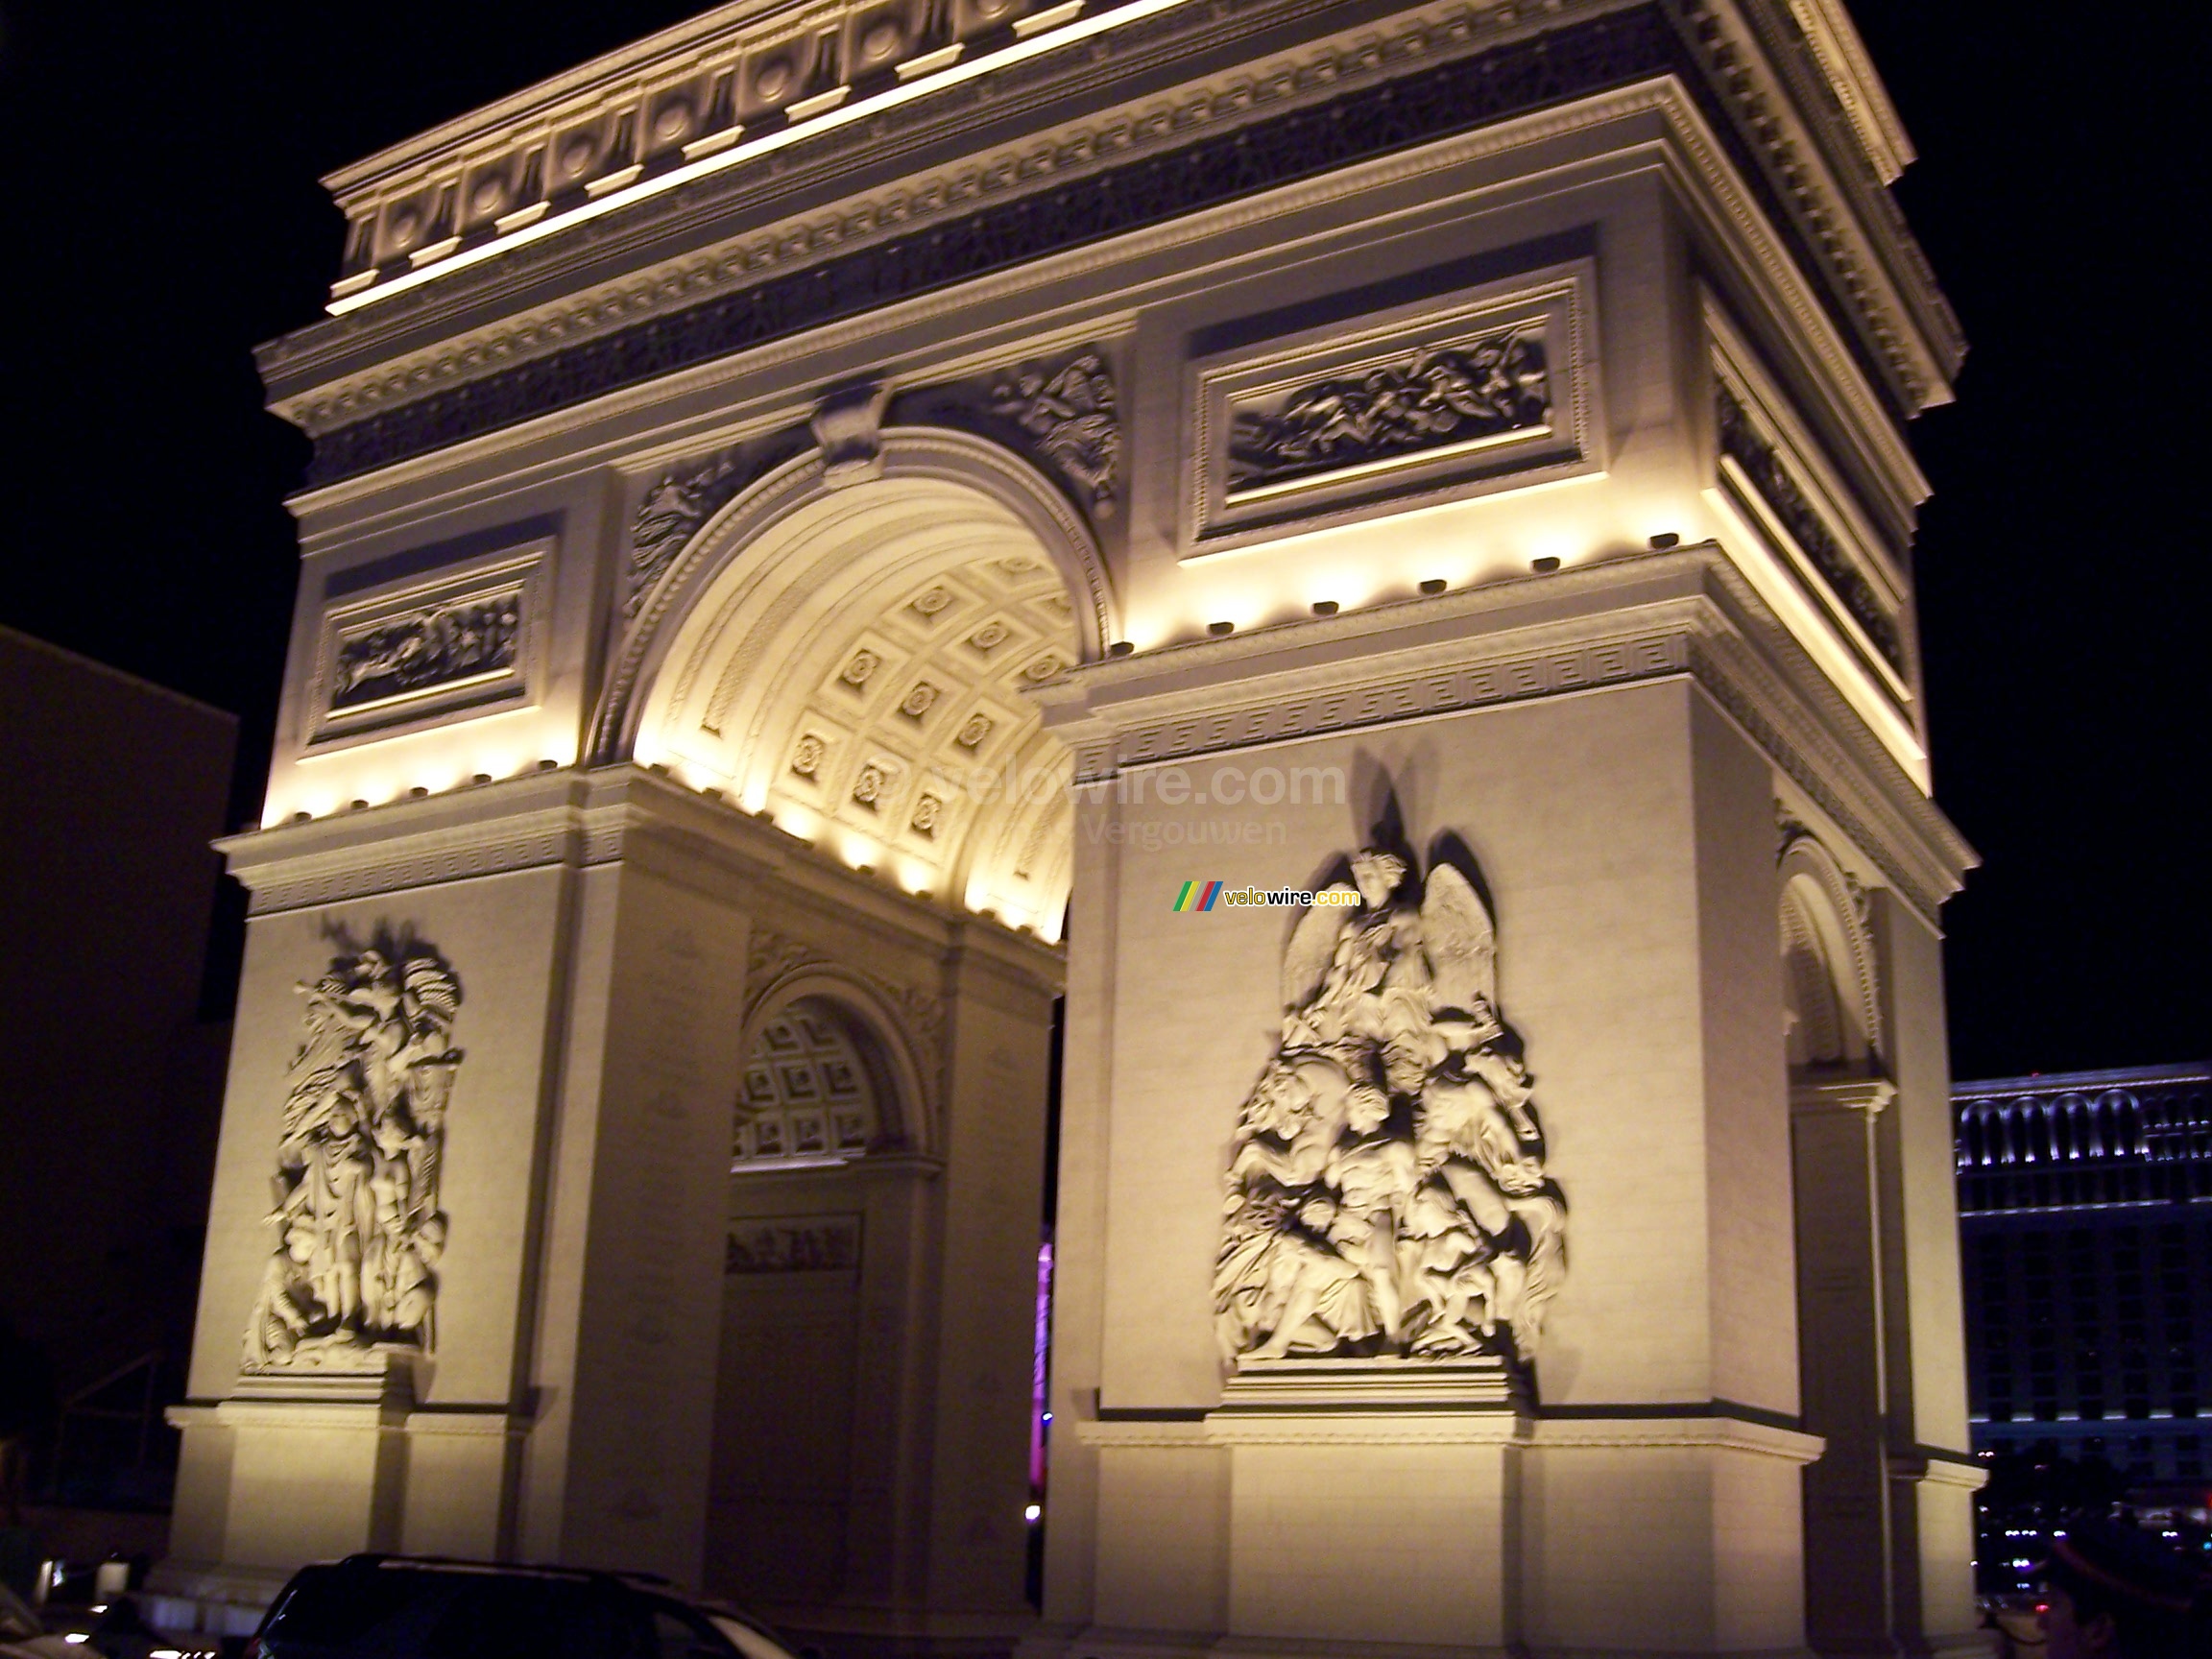 De replica van de Arc de Triomphe